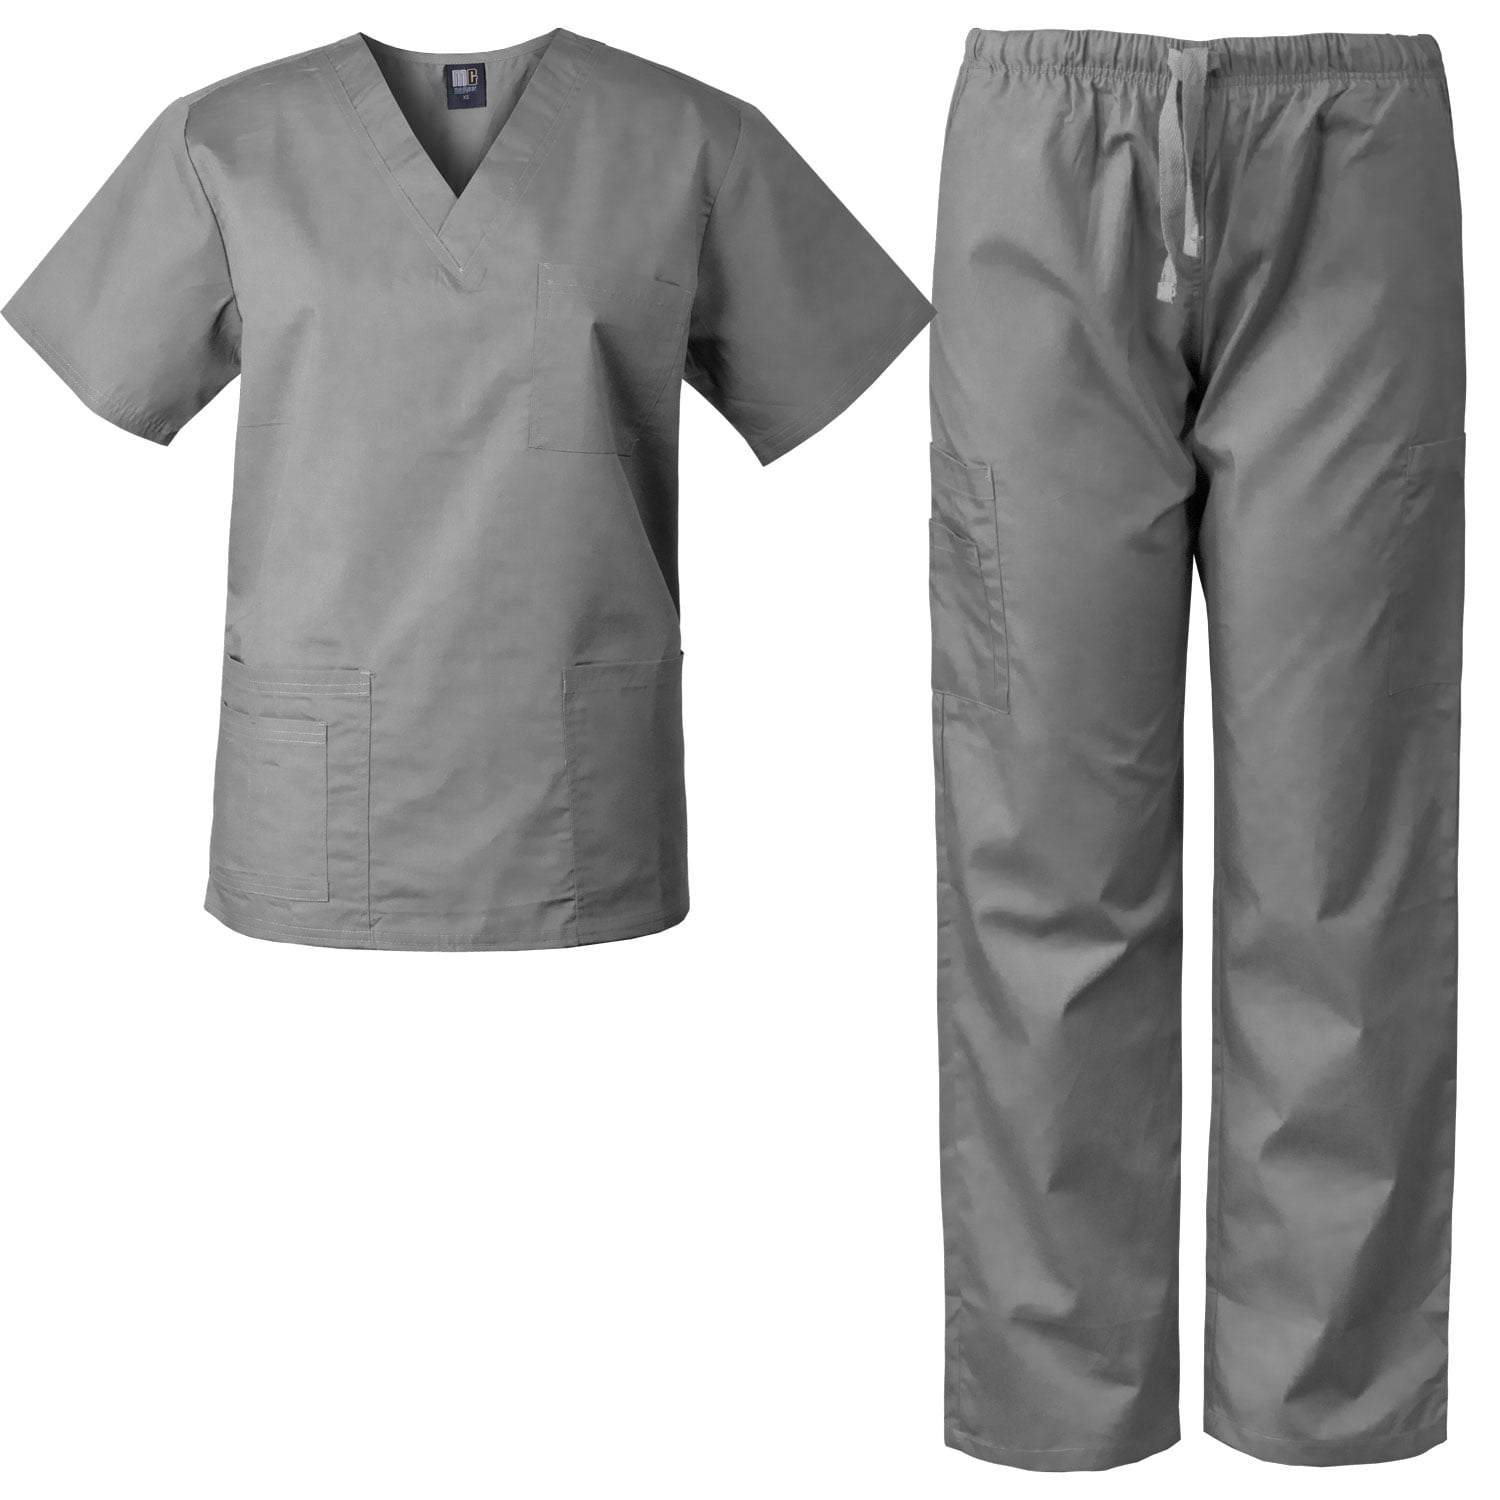 Unisex Men/Women Medical Hospital Nursing Uniforms Scrub Set Top & Pants 2XS-5XL